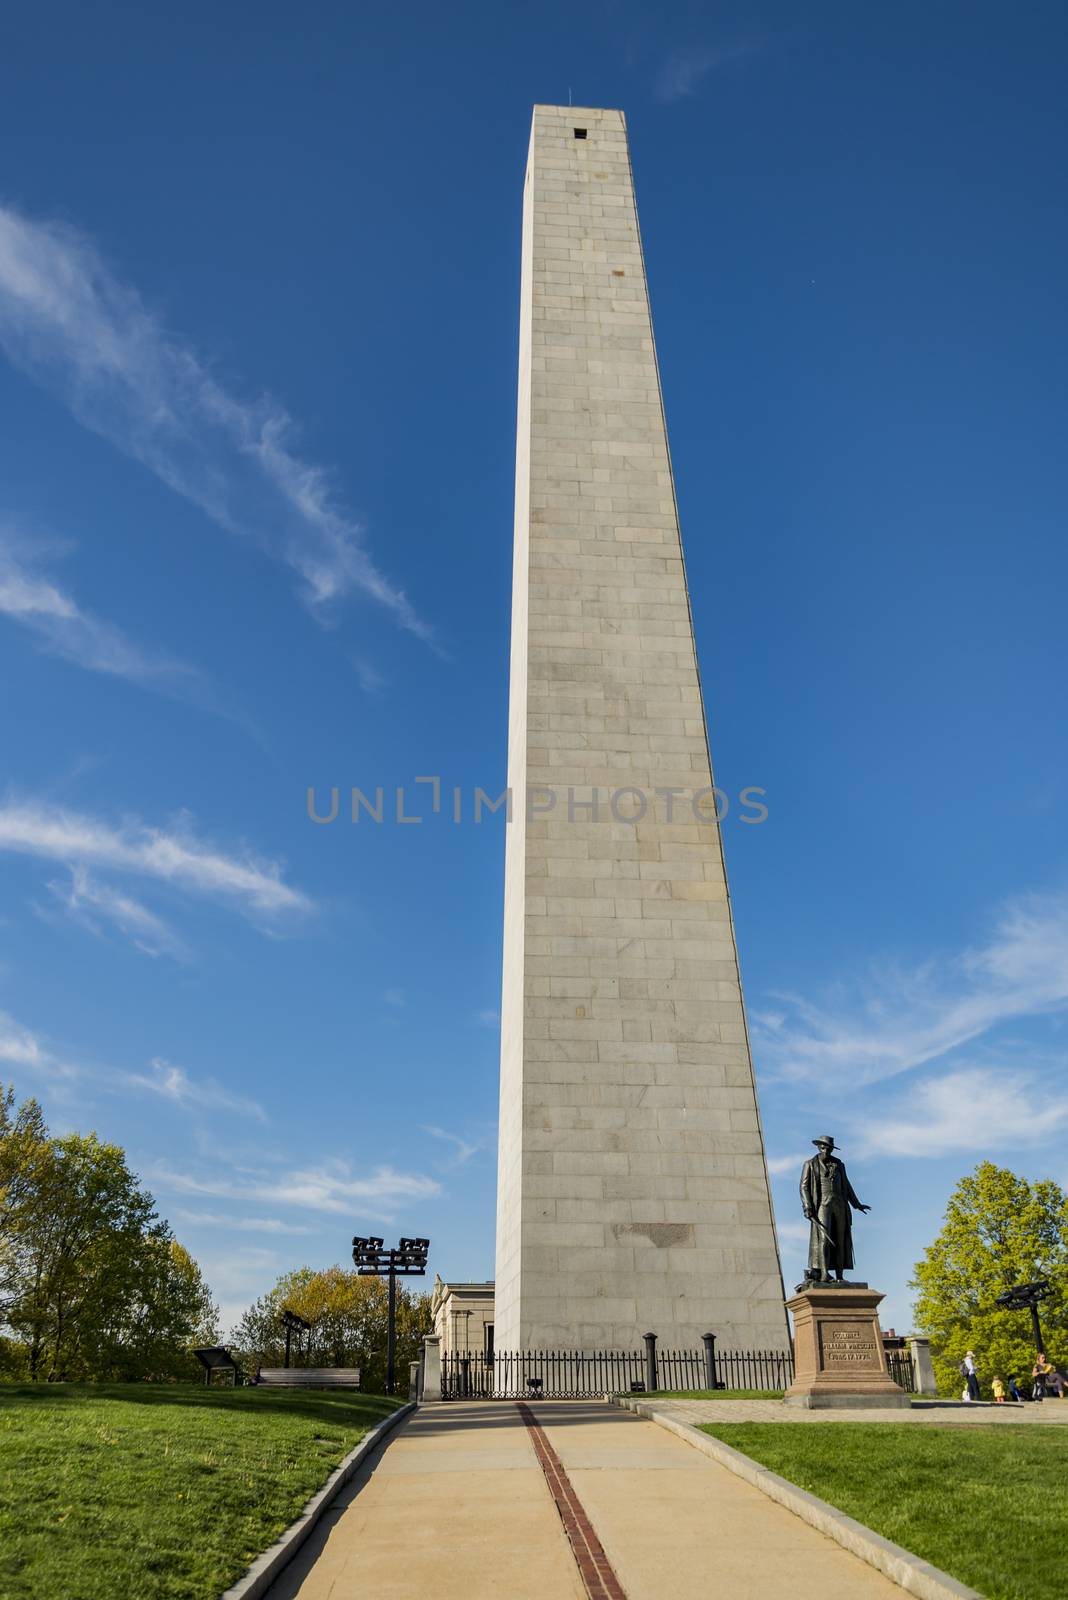 The Bunker Hill Monument in Boston, Massachusetts. by edella